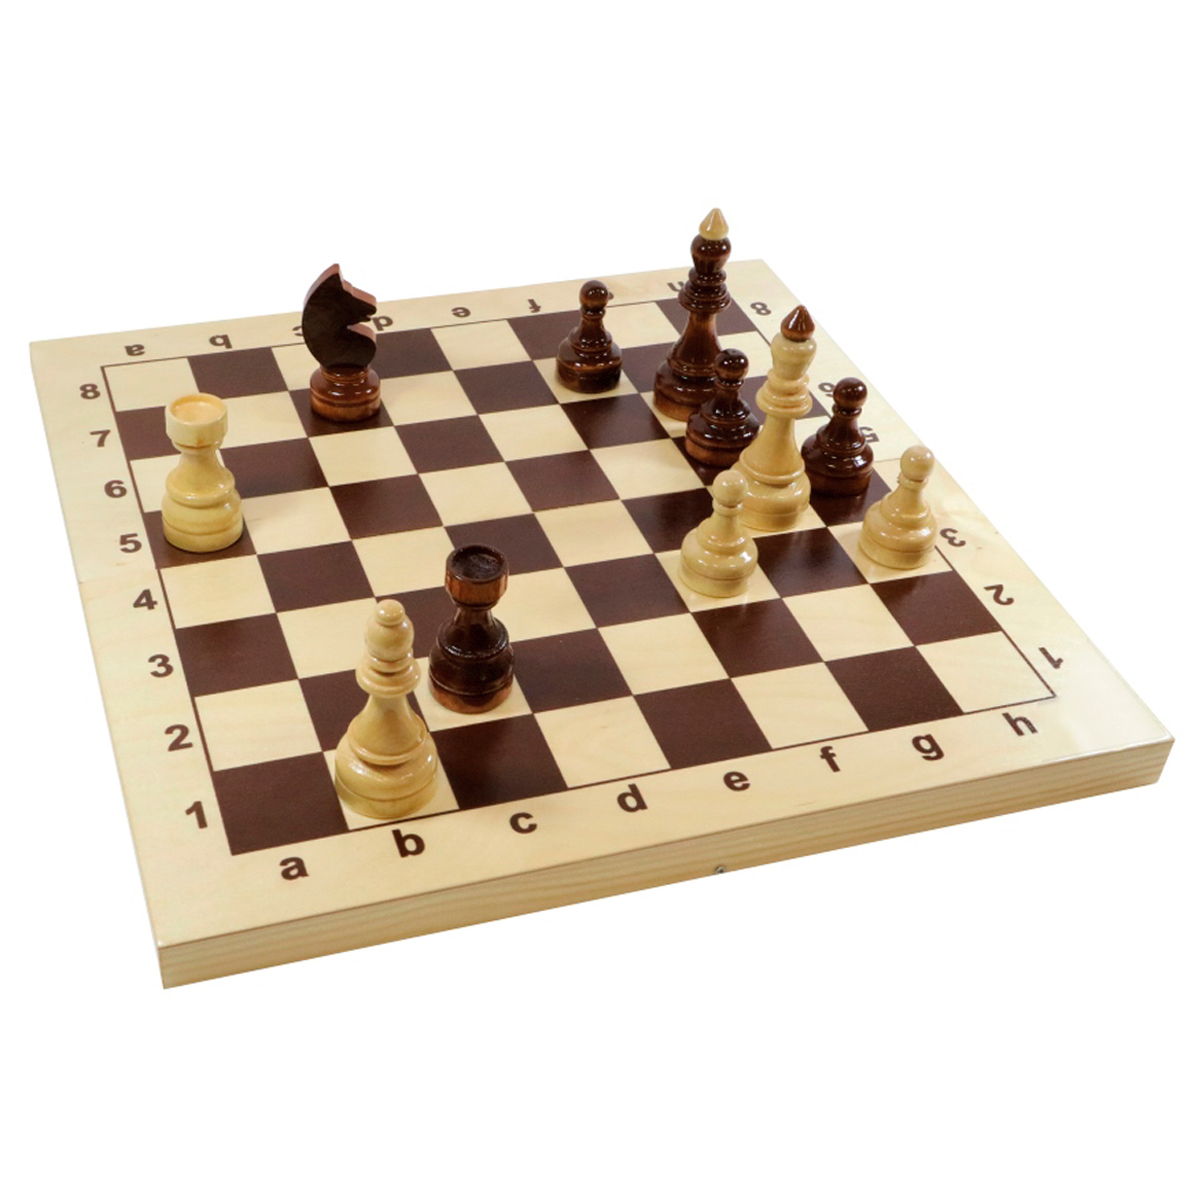 Гроссмейстер шахматы играть. Шахматы гроссмейстерские Десятое королевство. Шахматы гроссмейстерские деревянные (поле 43см х 43см) 02846. Шахматы Десятое королевство деревянные. Игра настольная "шахматы" Десятое королевство.